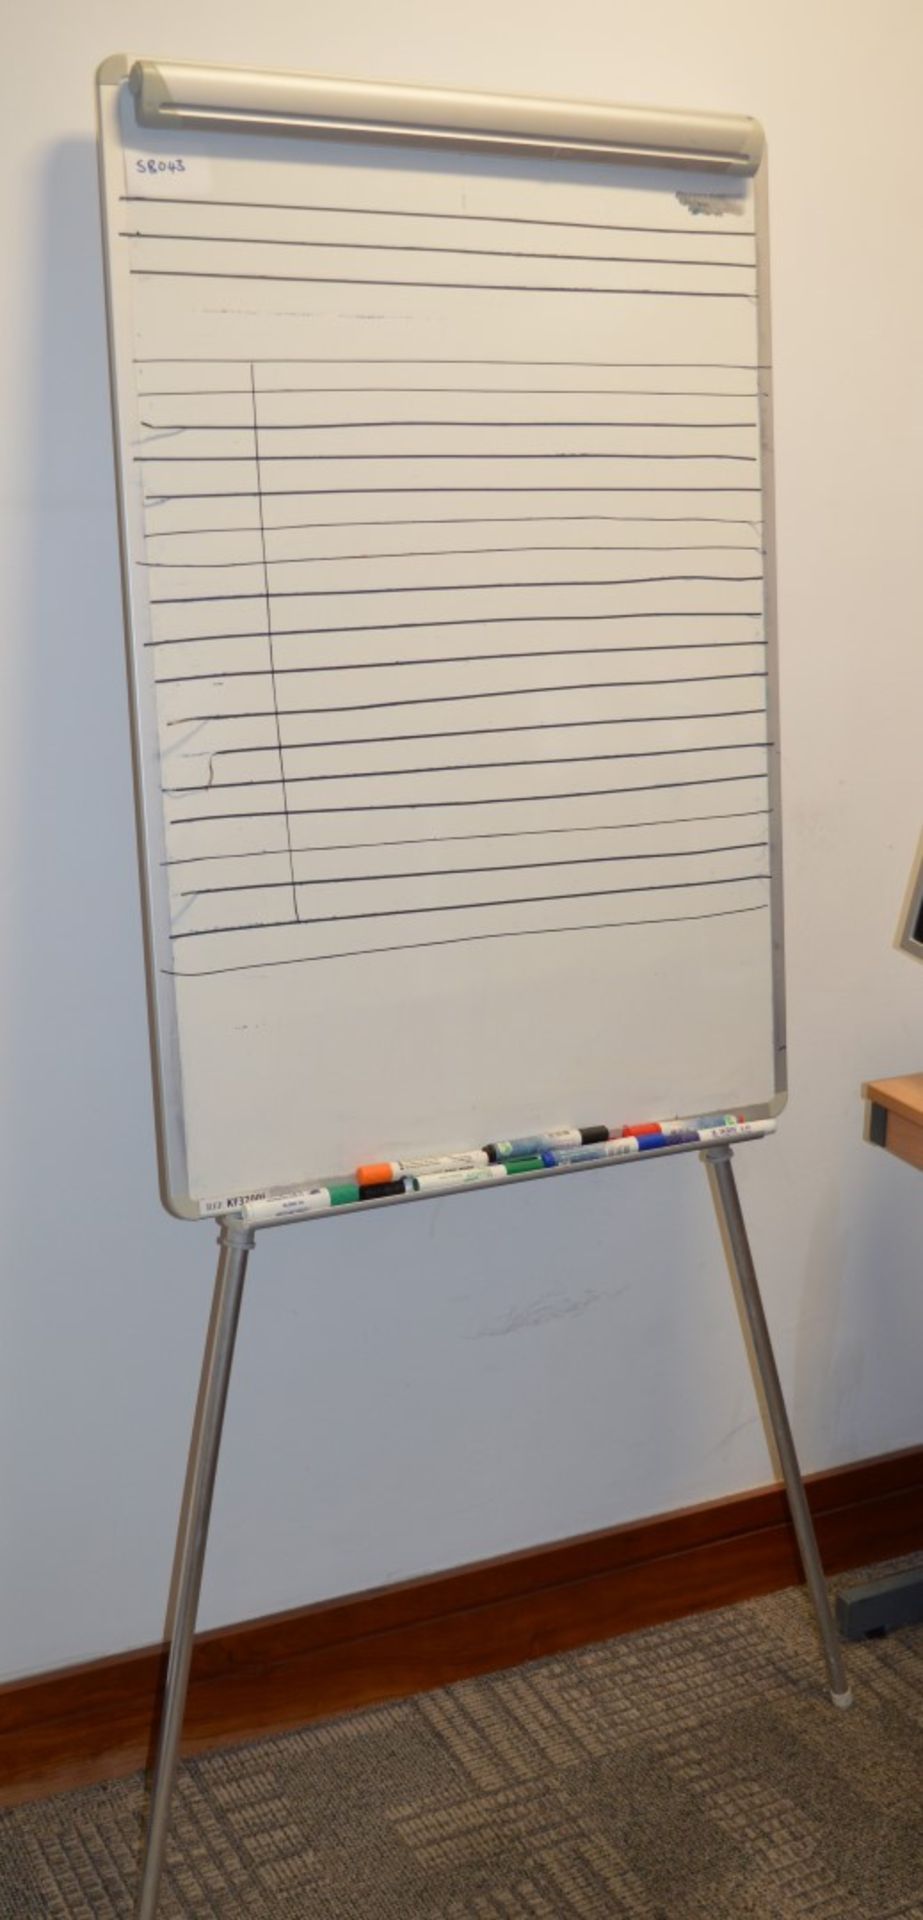 1 x Whiteboard Flip Chart - Overall Height: 170 cm x Board Size: 70 x 100 cm - Ref SB043 - CL106 -